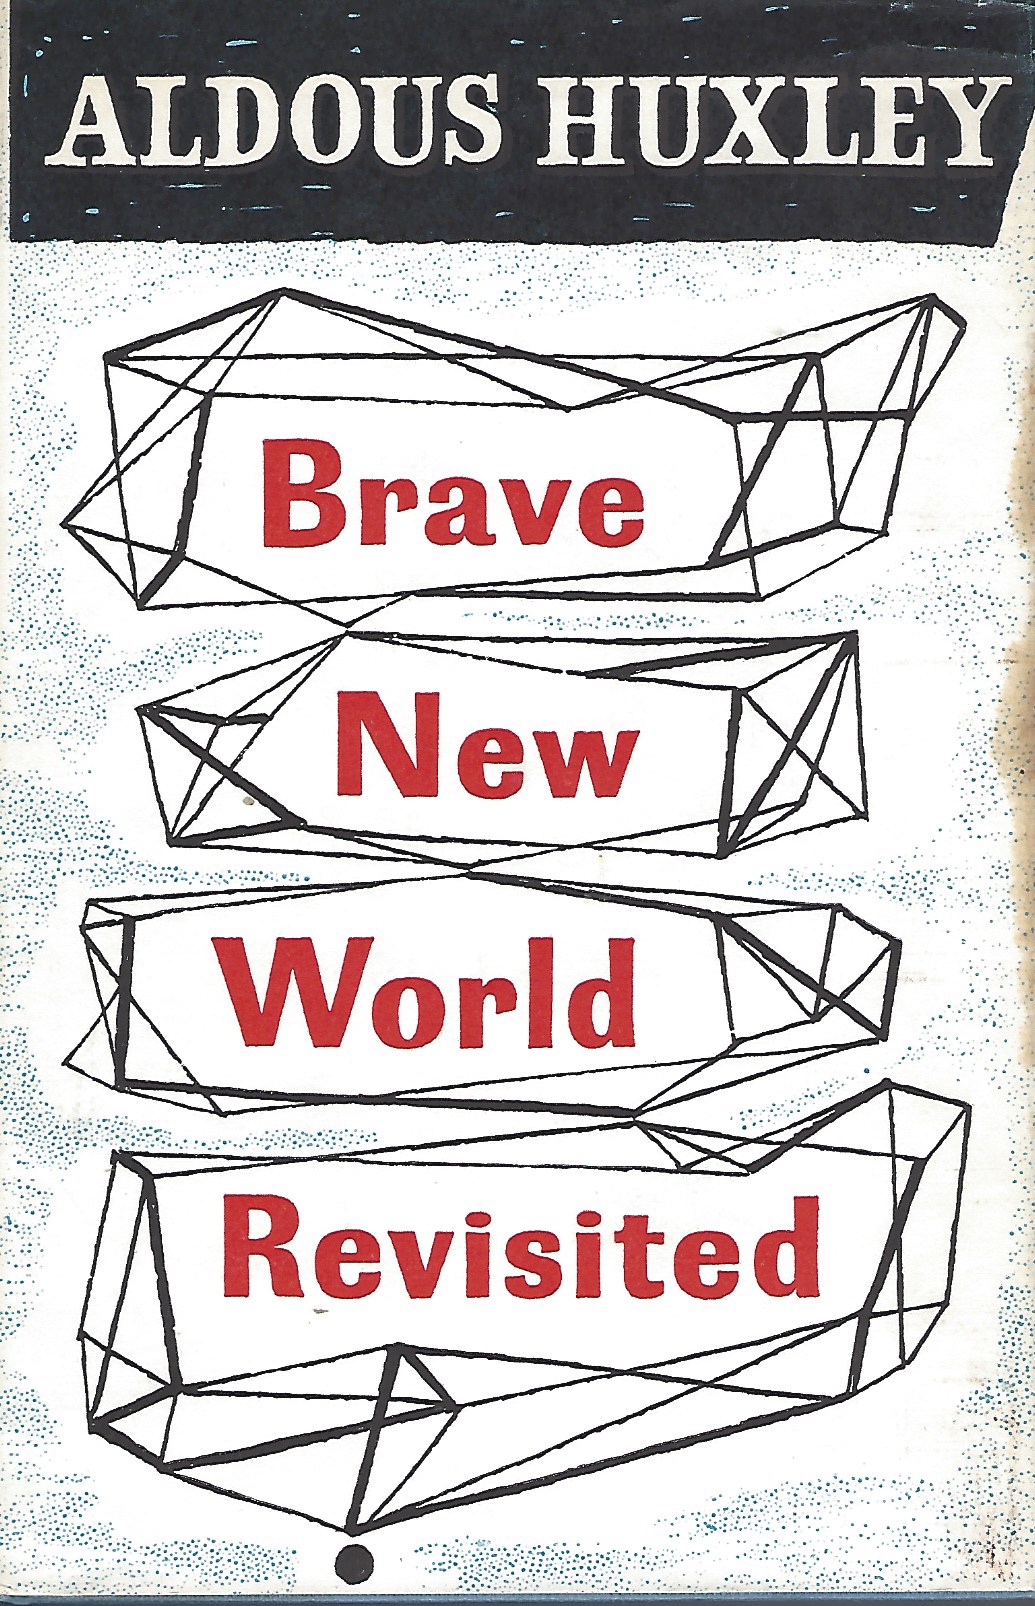 HUXLEY ALDOUS - Brave New World Revisited